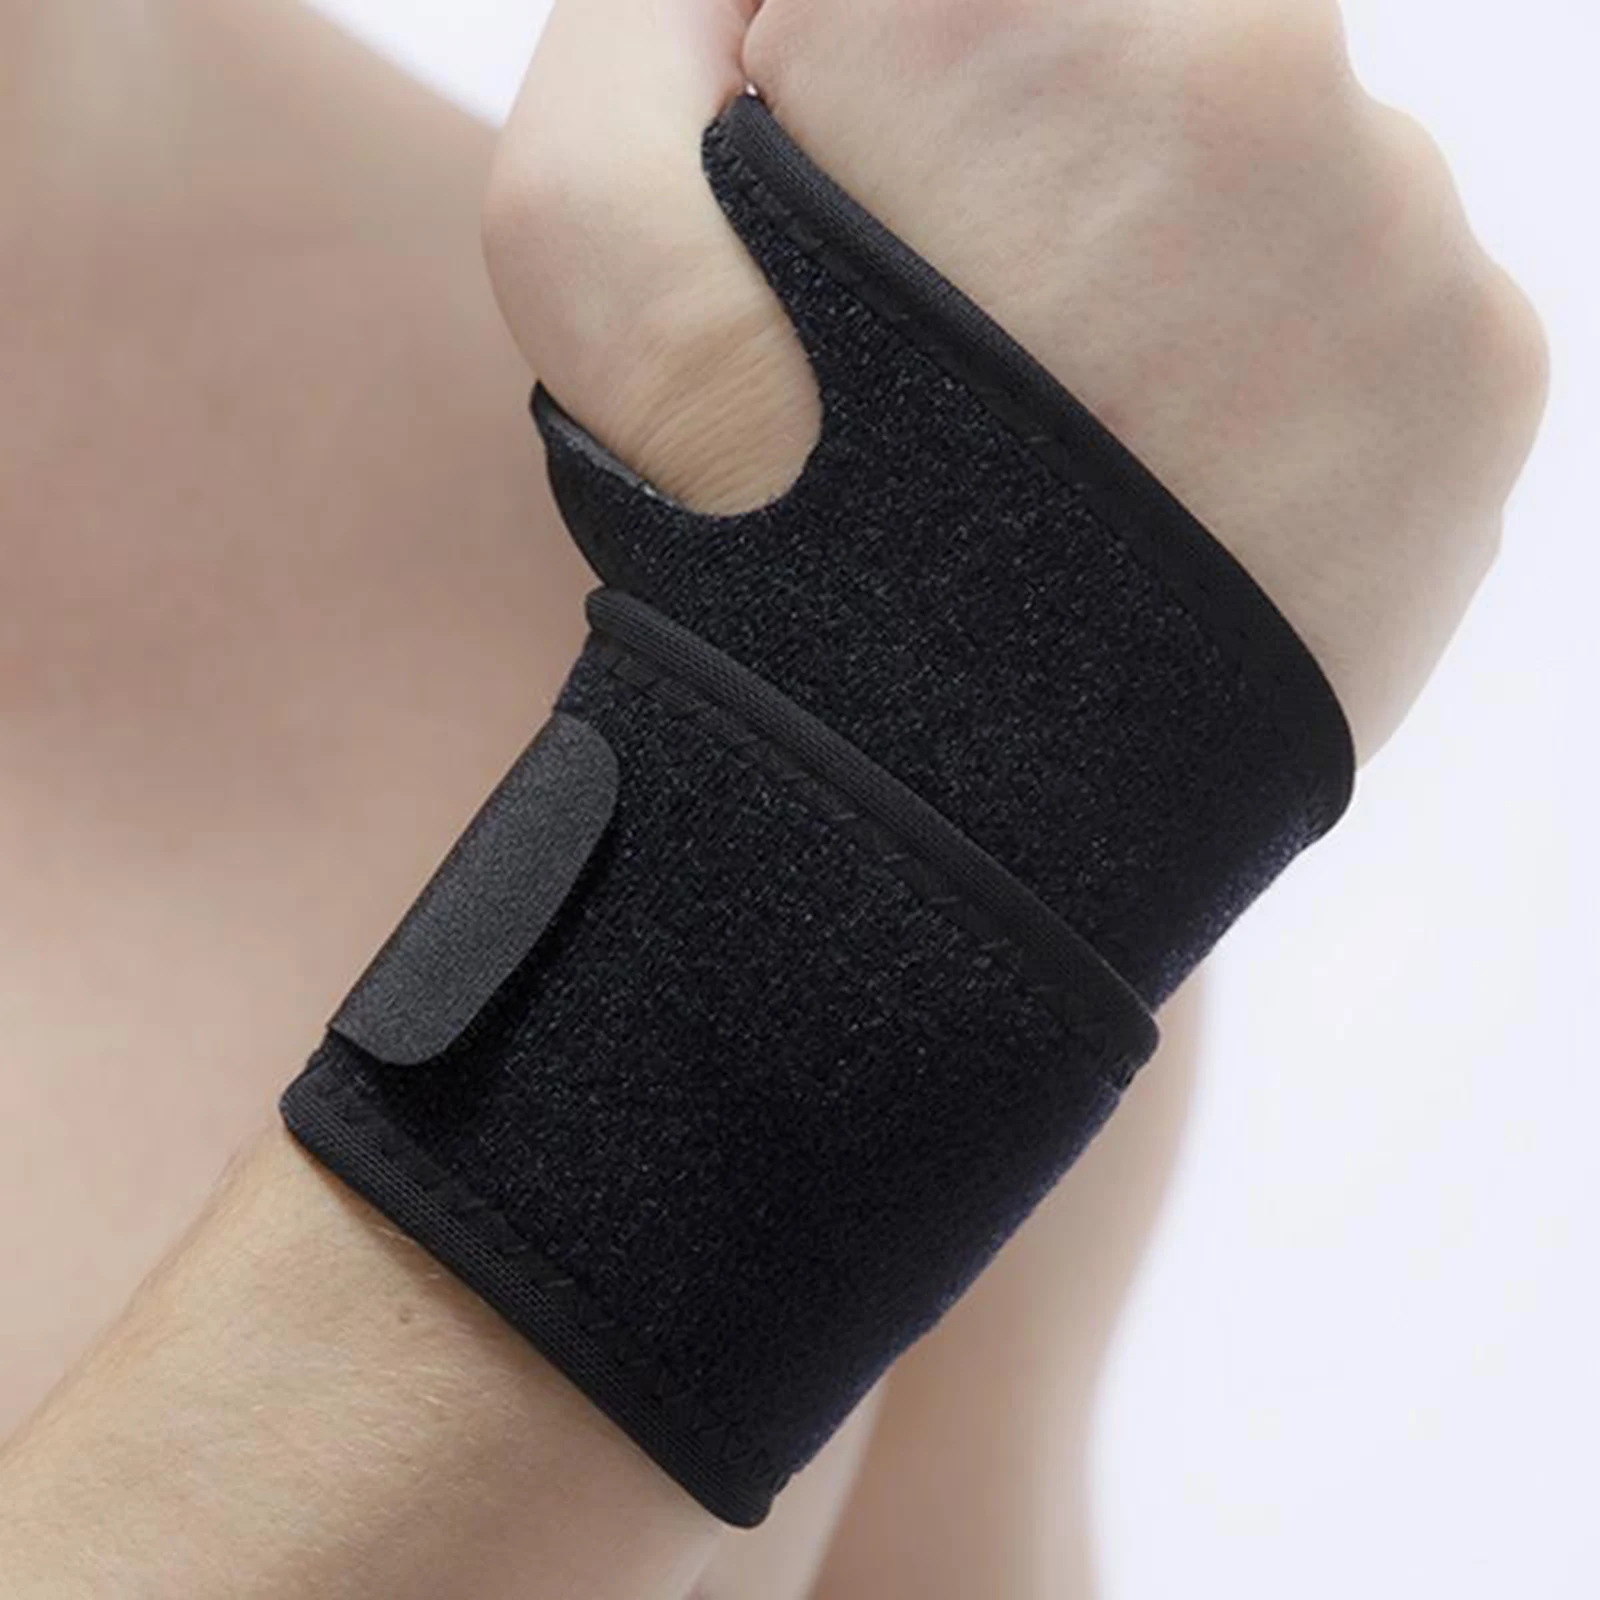 Wrist Support Brace,Adjustable Wrist Strap Reversible Wrist Brace for Sports